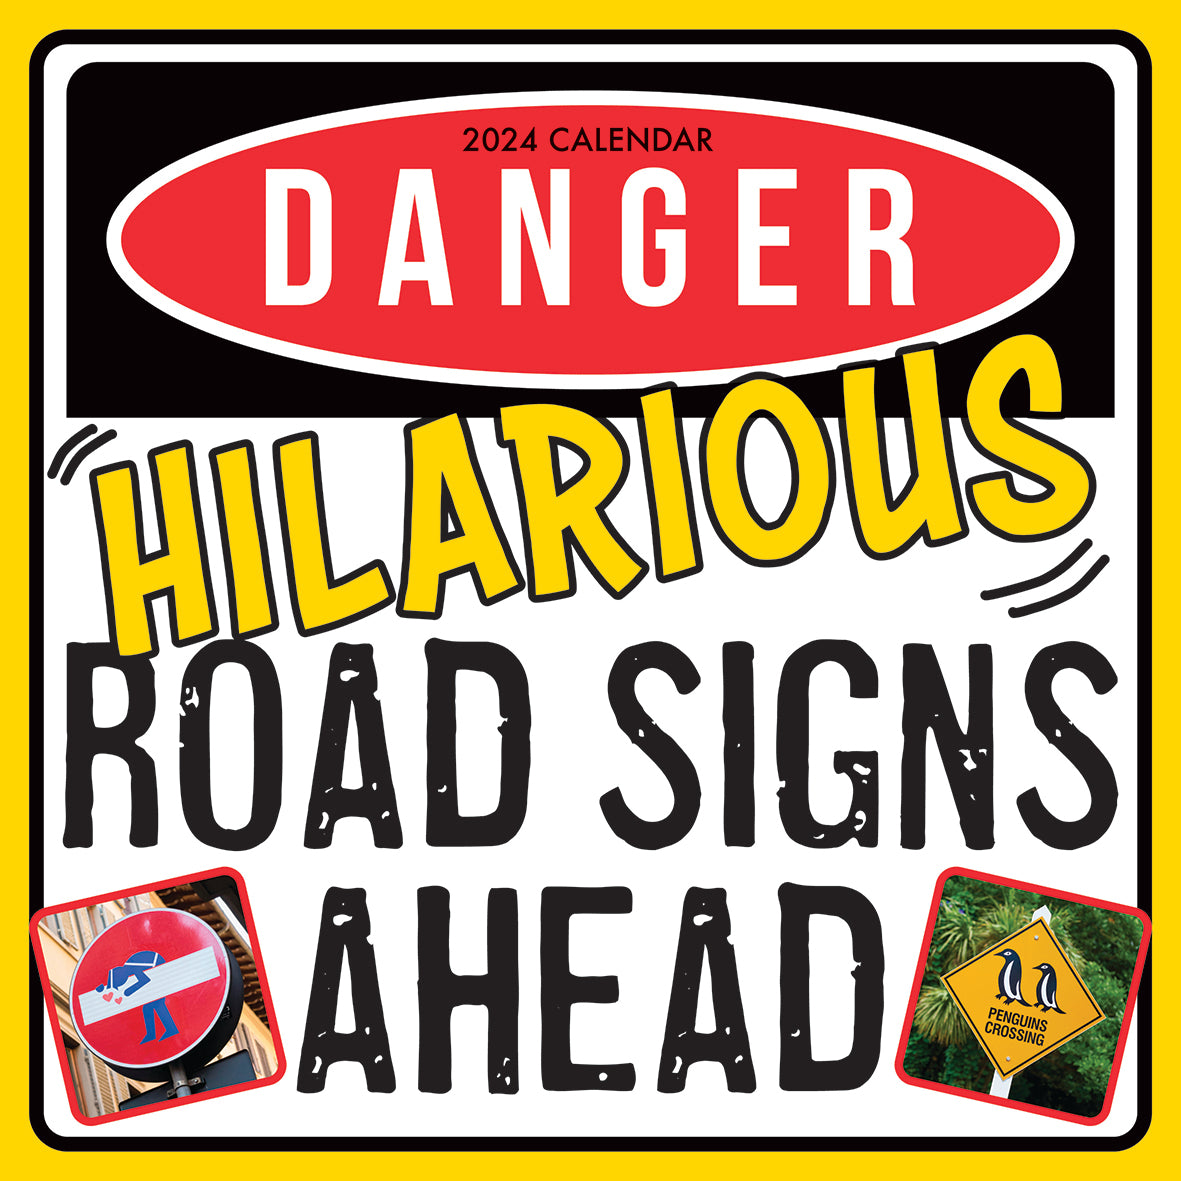 2024 Danger!...Hilarious Road Signs Ahead - Square Wall Calendar